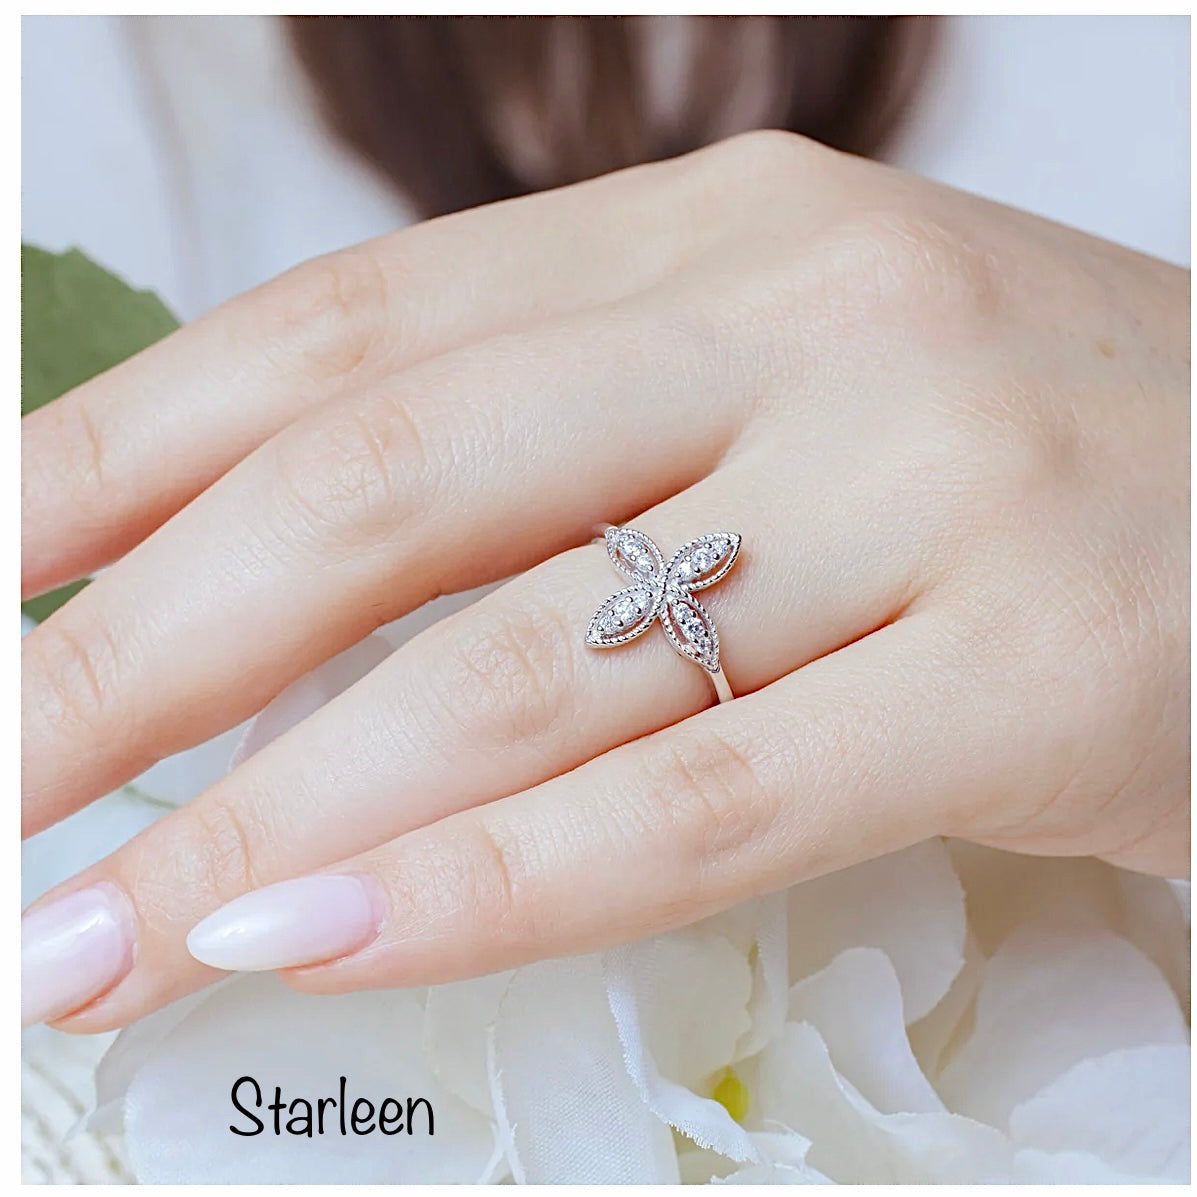 Starleen Ring